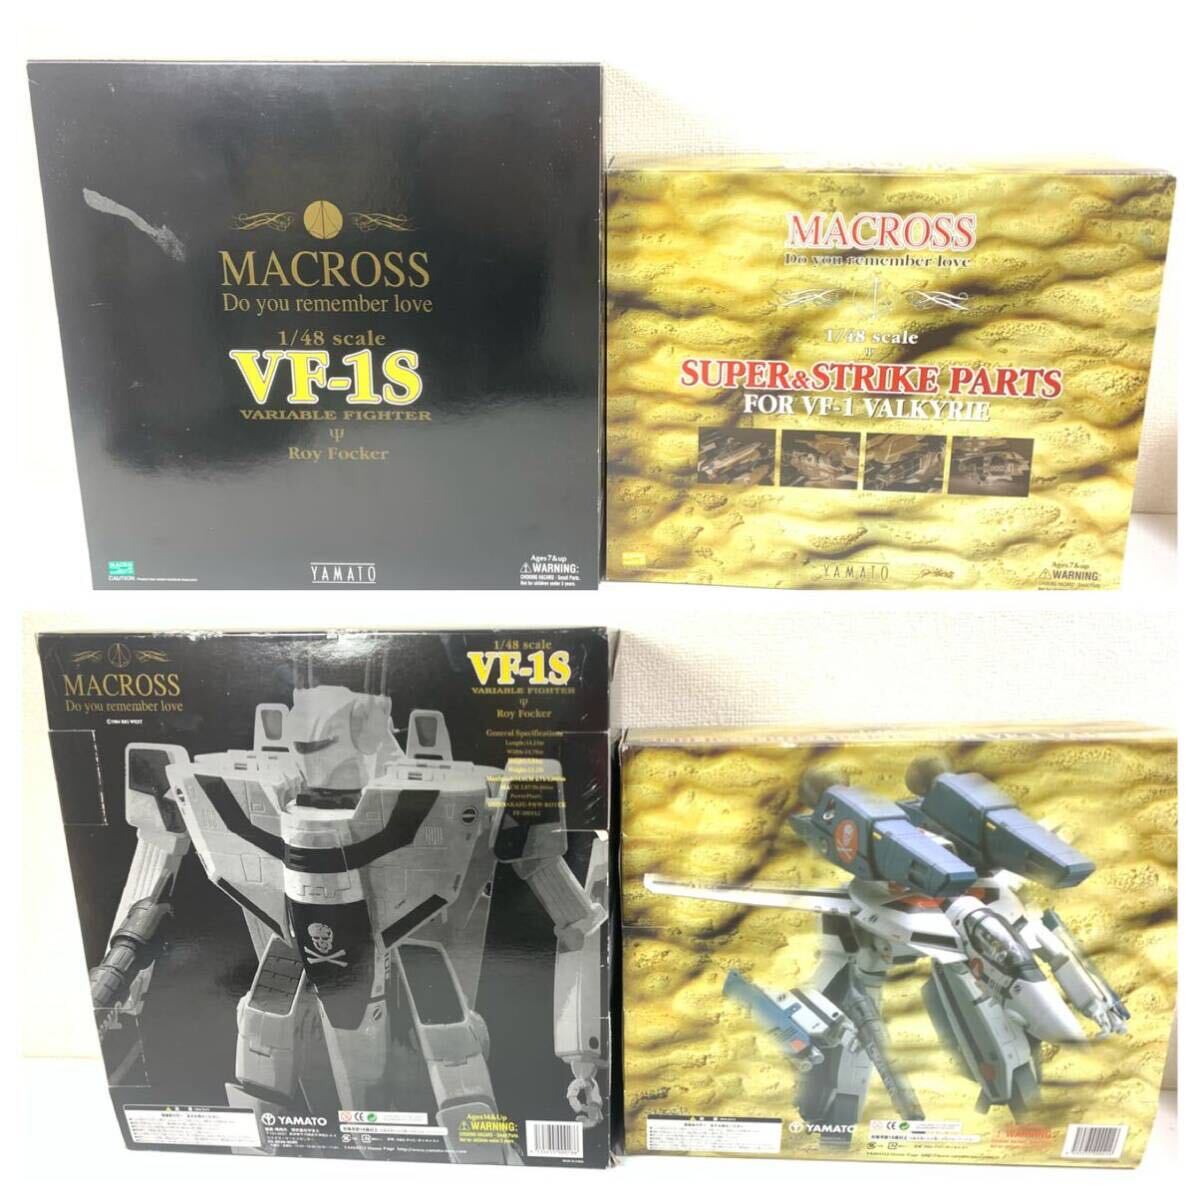 YAMATO... Super Dimension Fortress Macross 1/48 VF-1S bar сверло -roifo машина машина MACROSS SUPER&STRIKE PARTS FOR VF-1 VALKYRIE комплект SY